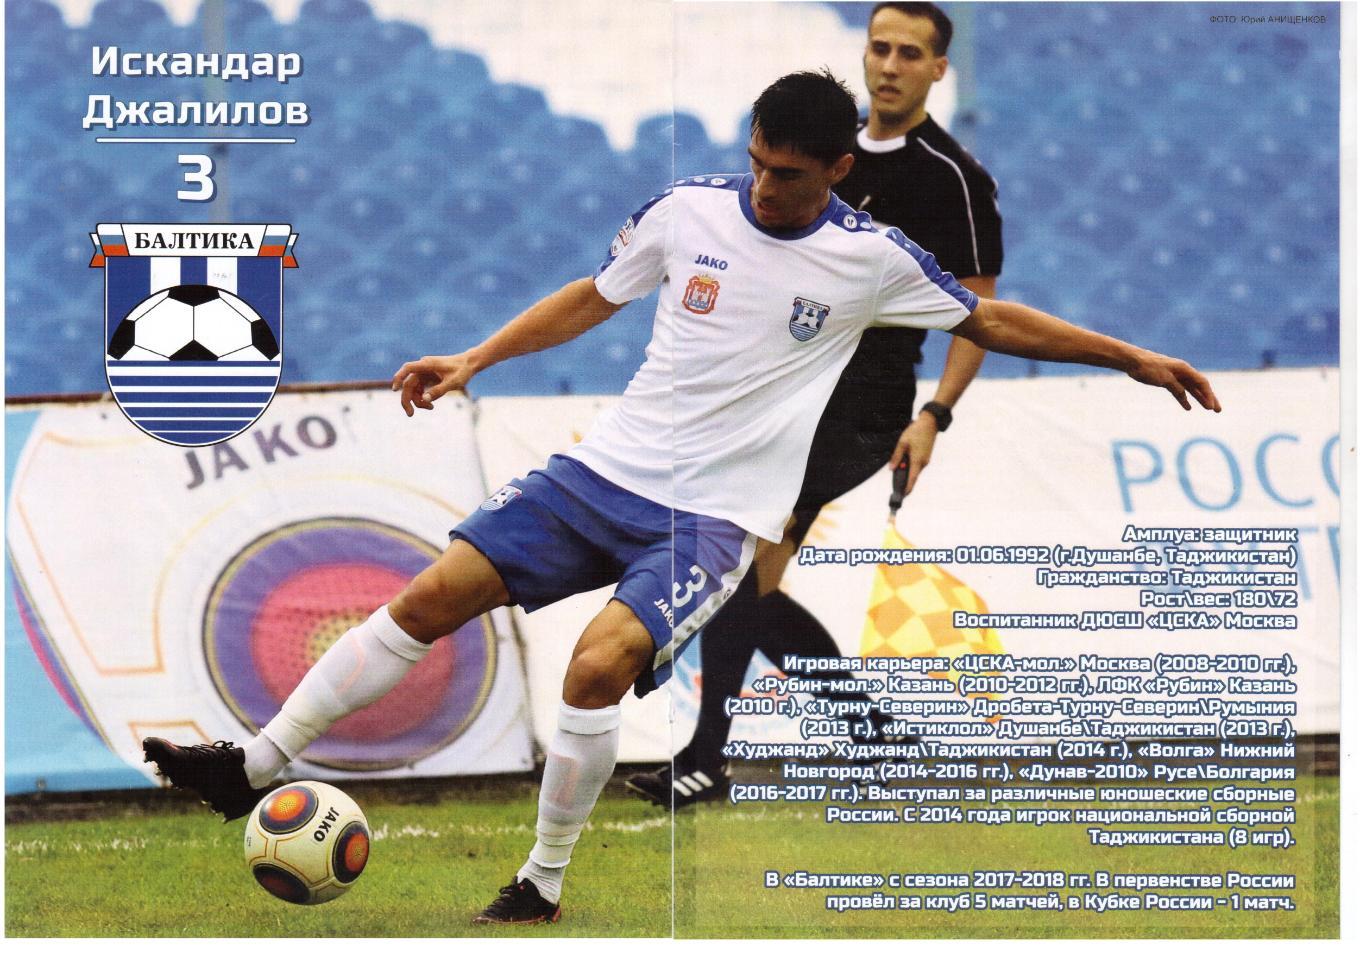 Плакат футбольный Балтика (Калиниград) Искандар Джалилов № 3 из программки